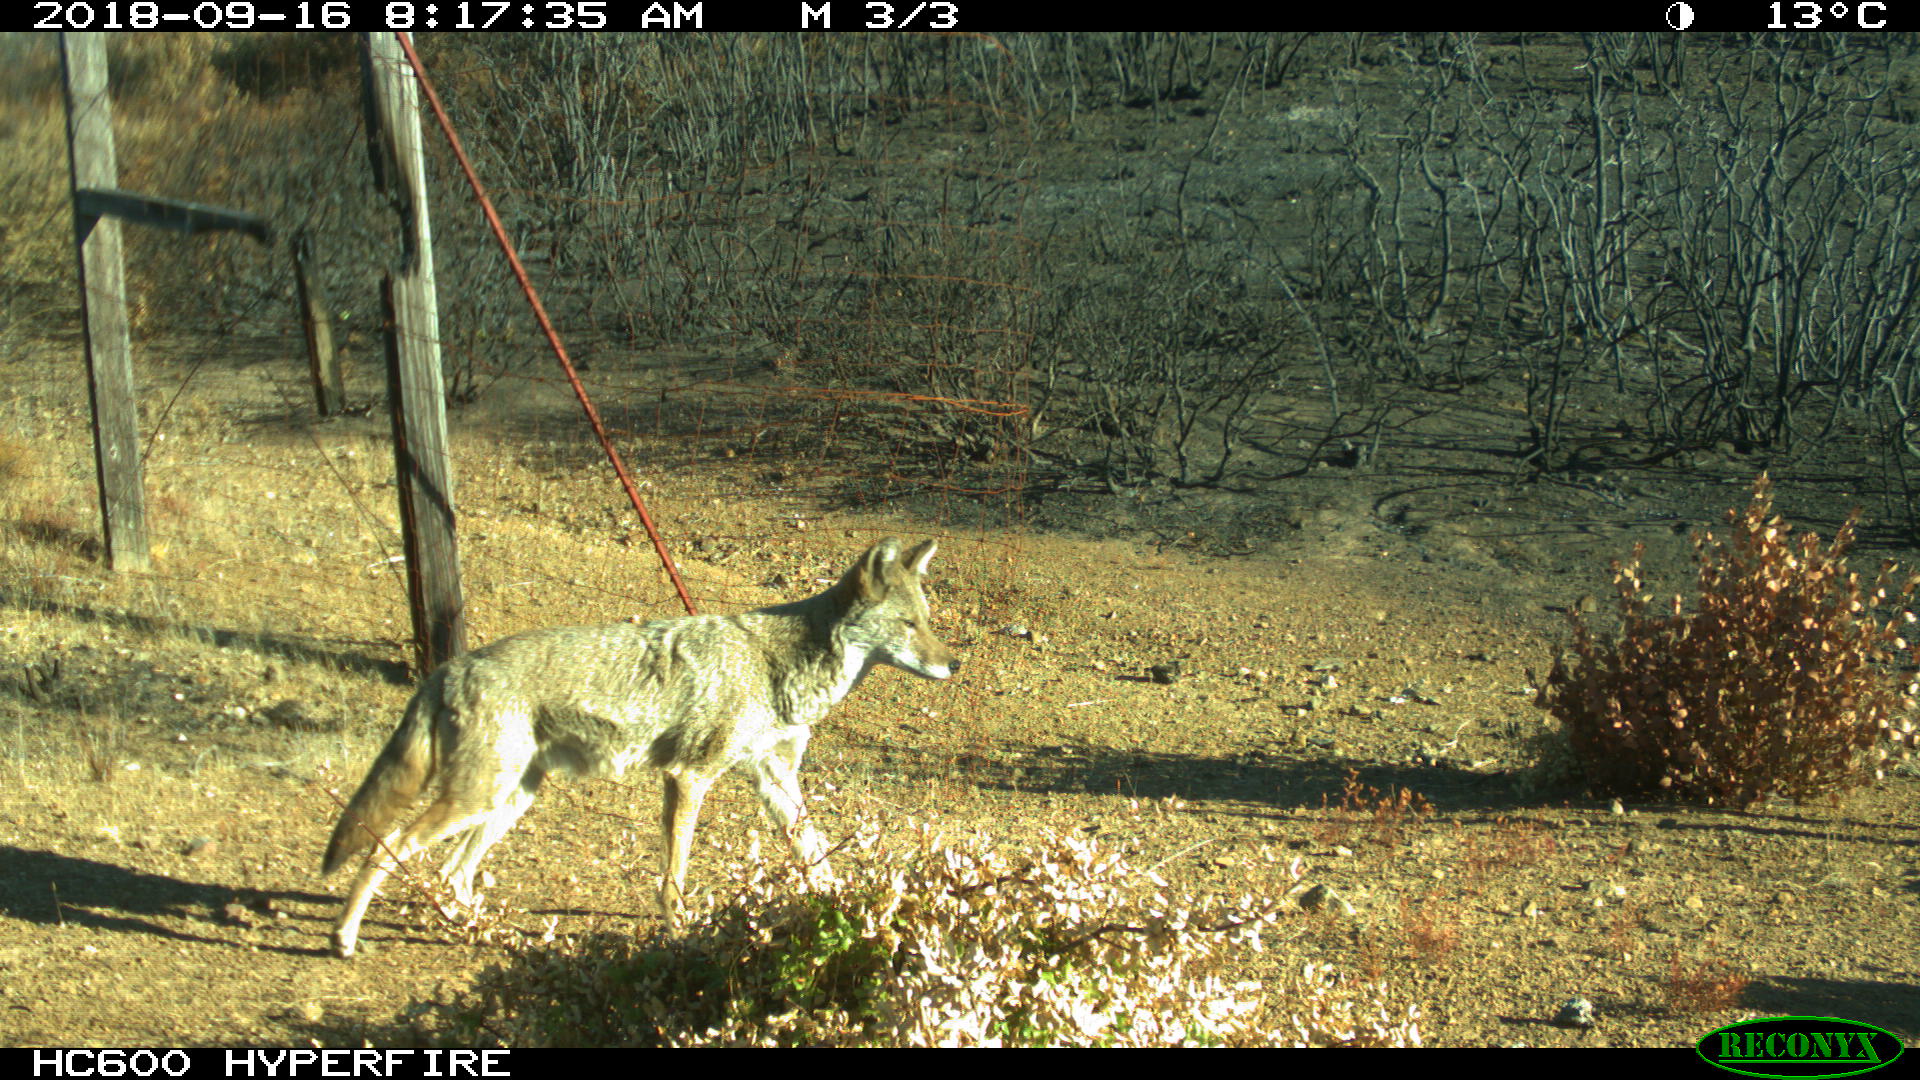 A camera trap photo of a coyote